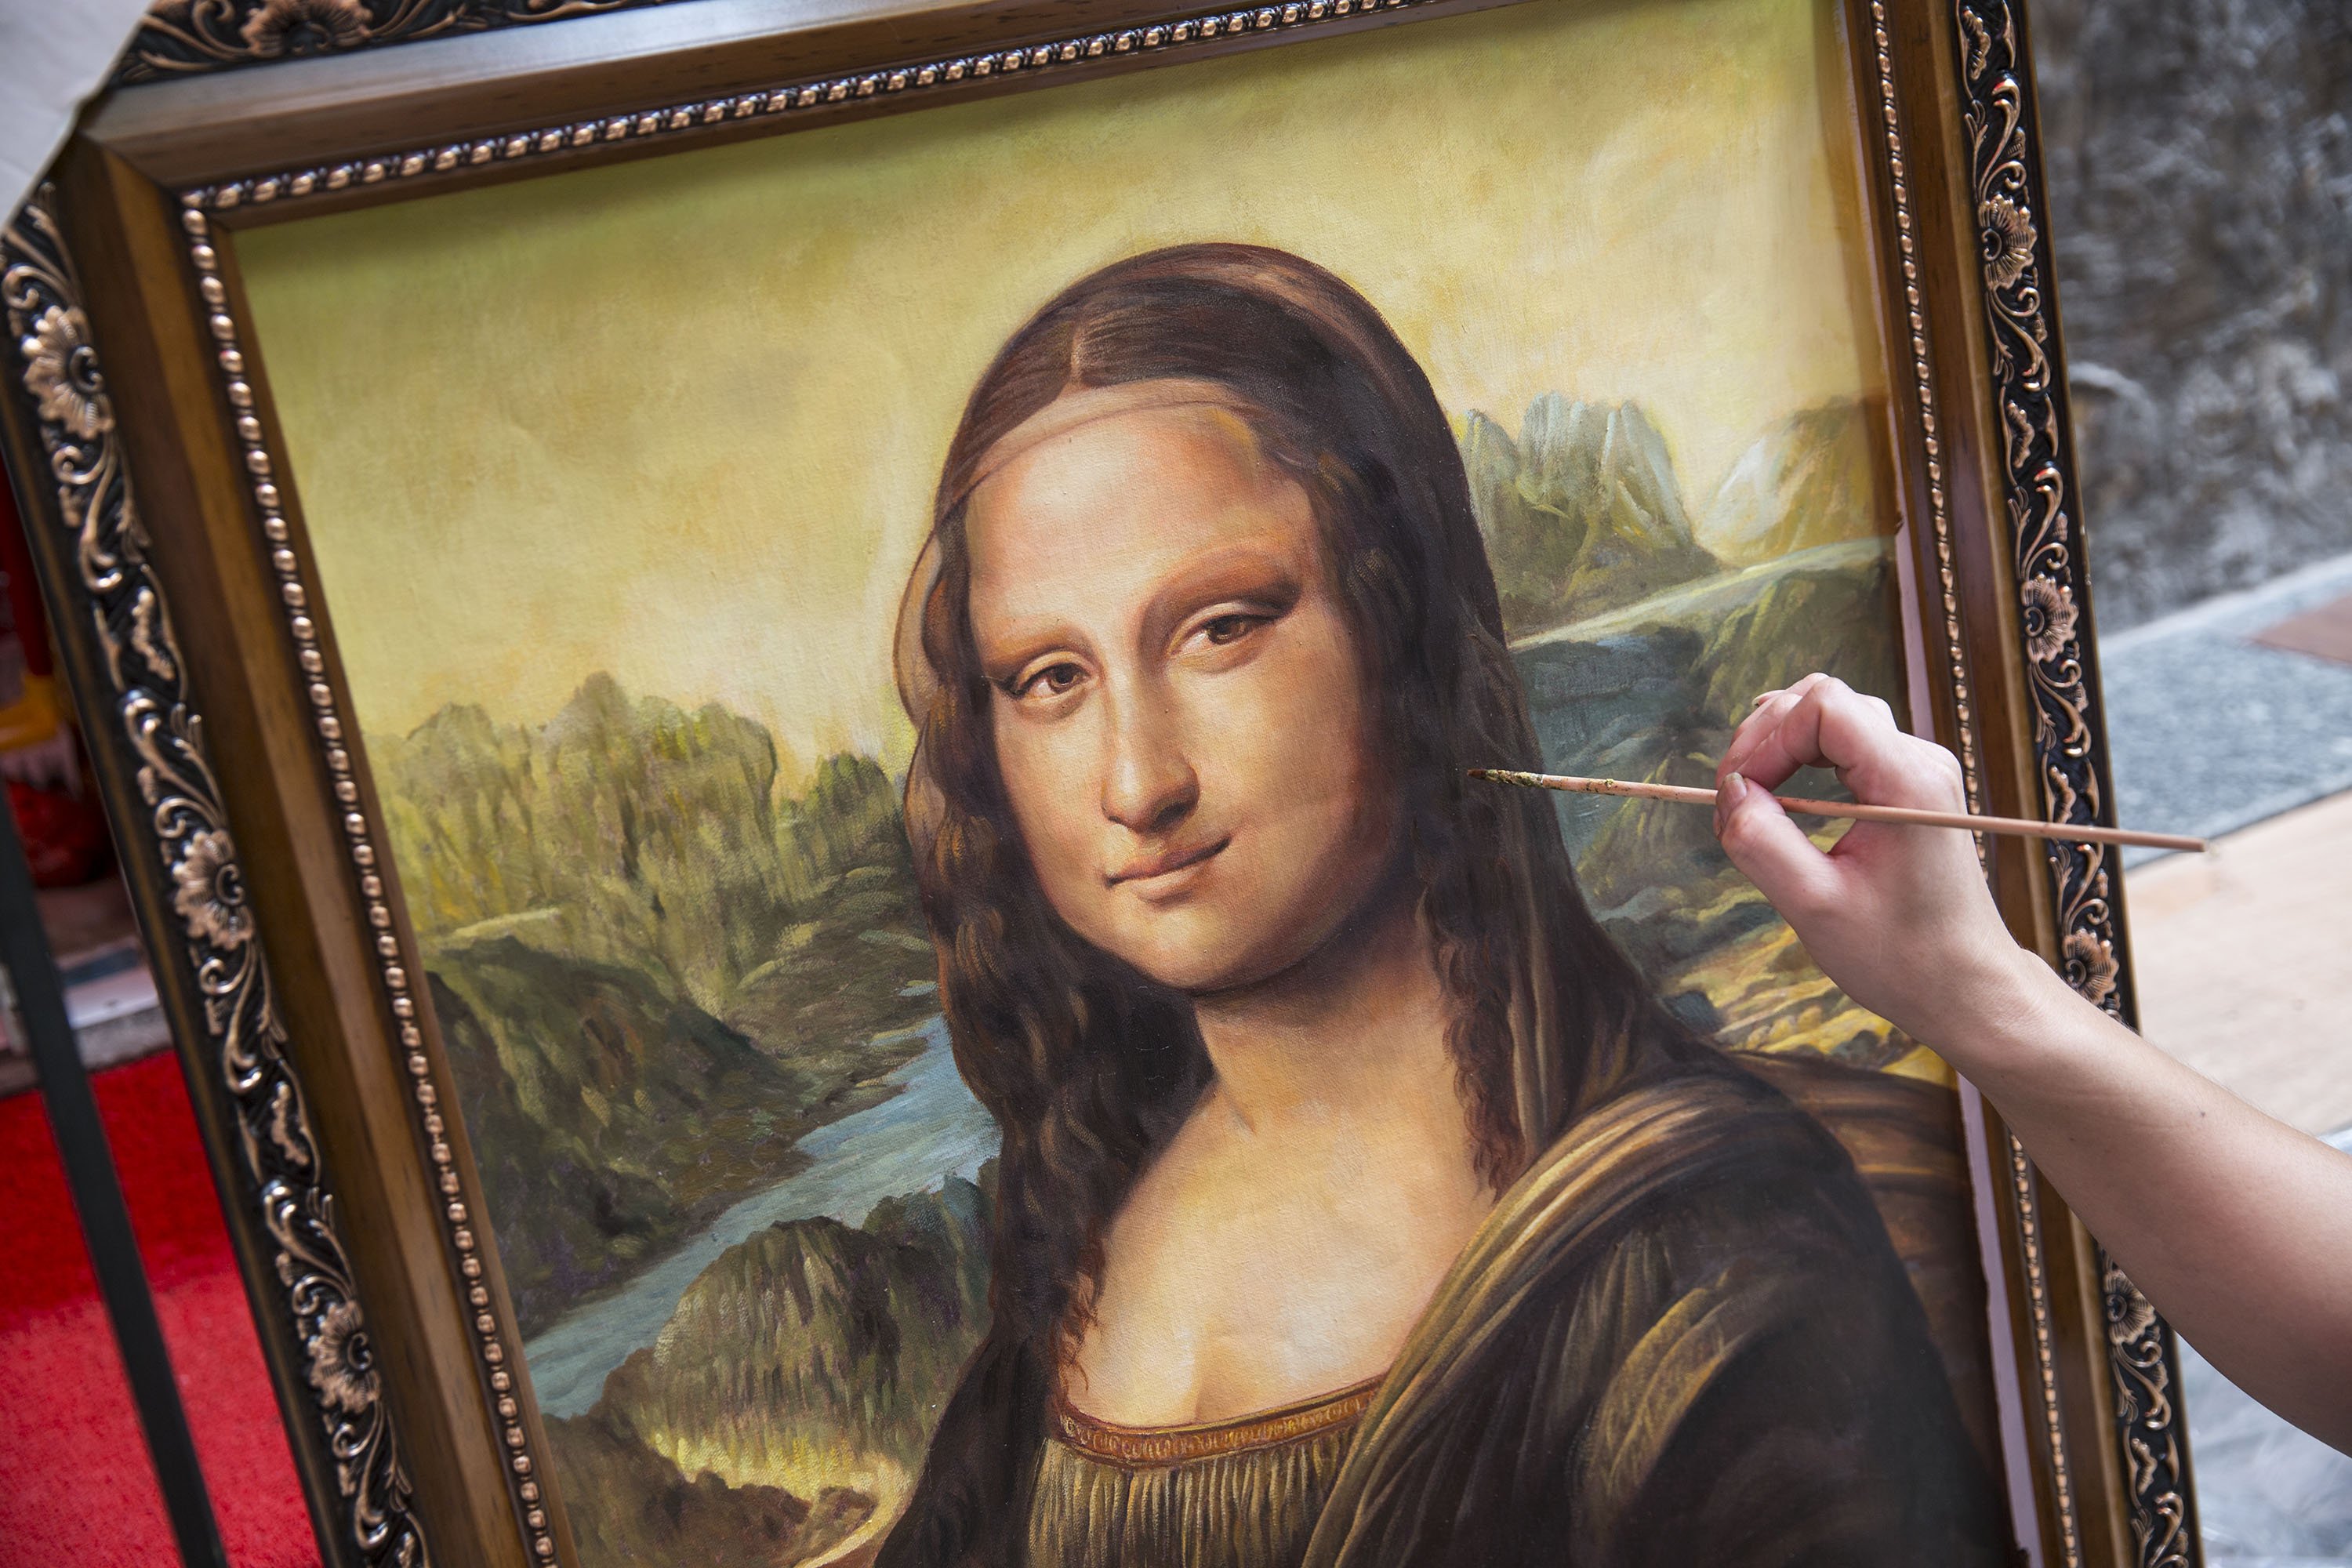 Название самых знаменитых картин. Мона Лиза картина Леонардо да Винчи. Леонардо да Винчи улыбка Джоконды. Улыбка моны Лизы картина. Портрет моны Лизы Джоконда.